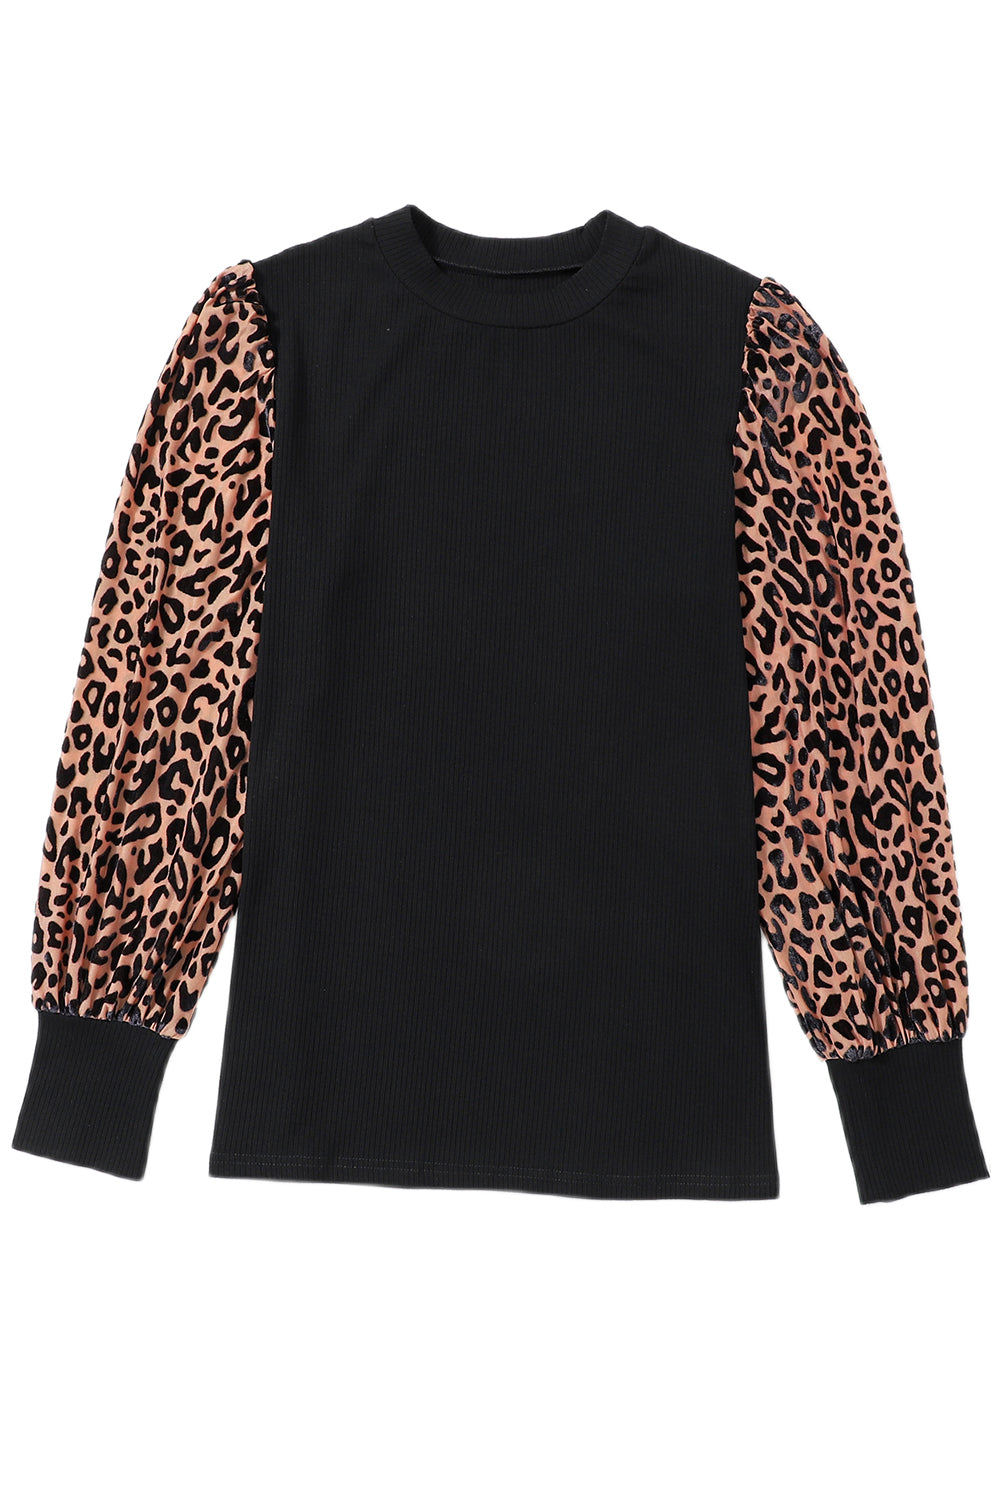 Black Leopard Print Long Sleeve Ribbed Knit Blouse-26